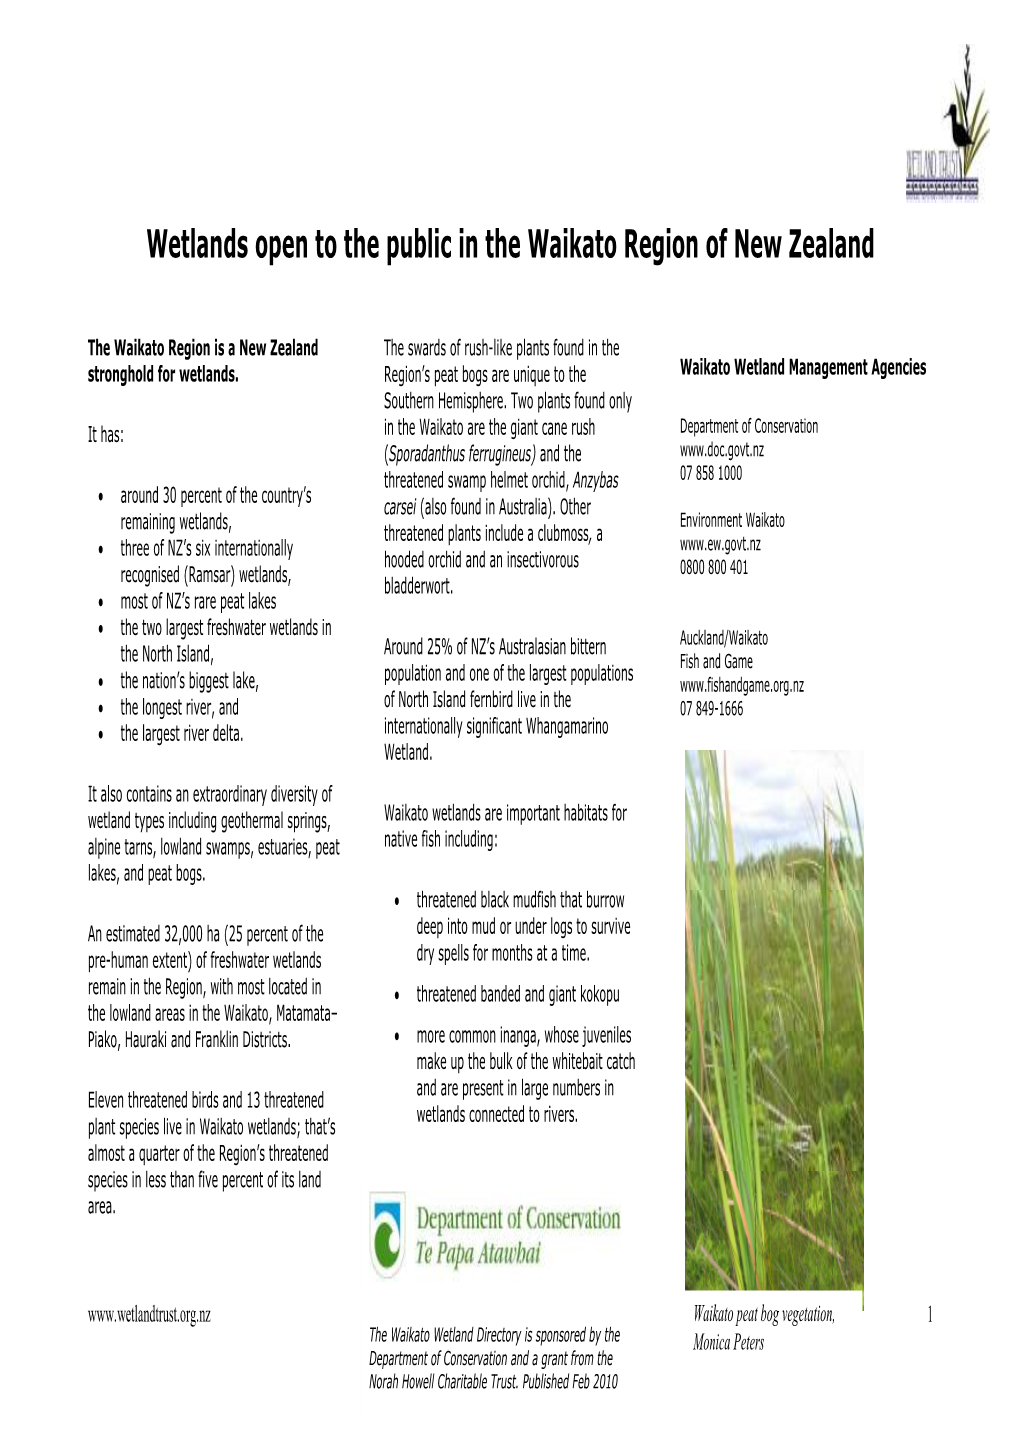 Wetlands Open to the Public in the Waikato Region of New Zealand